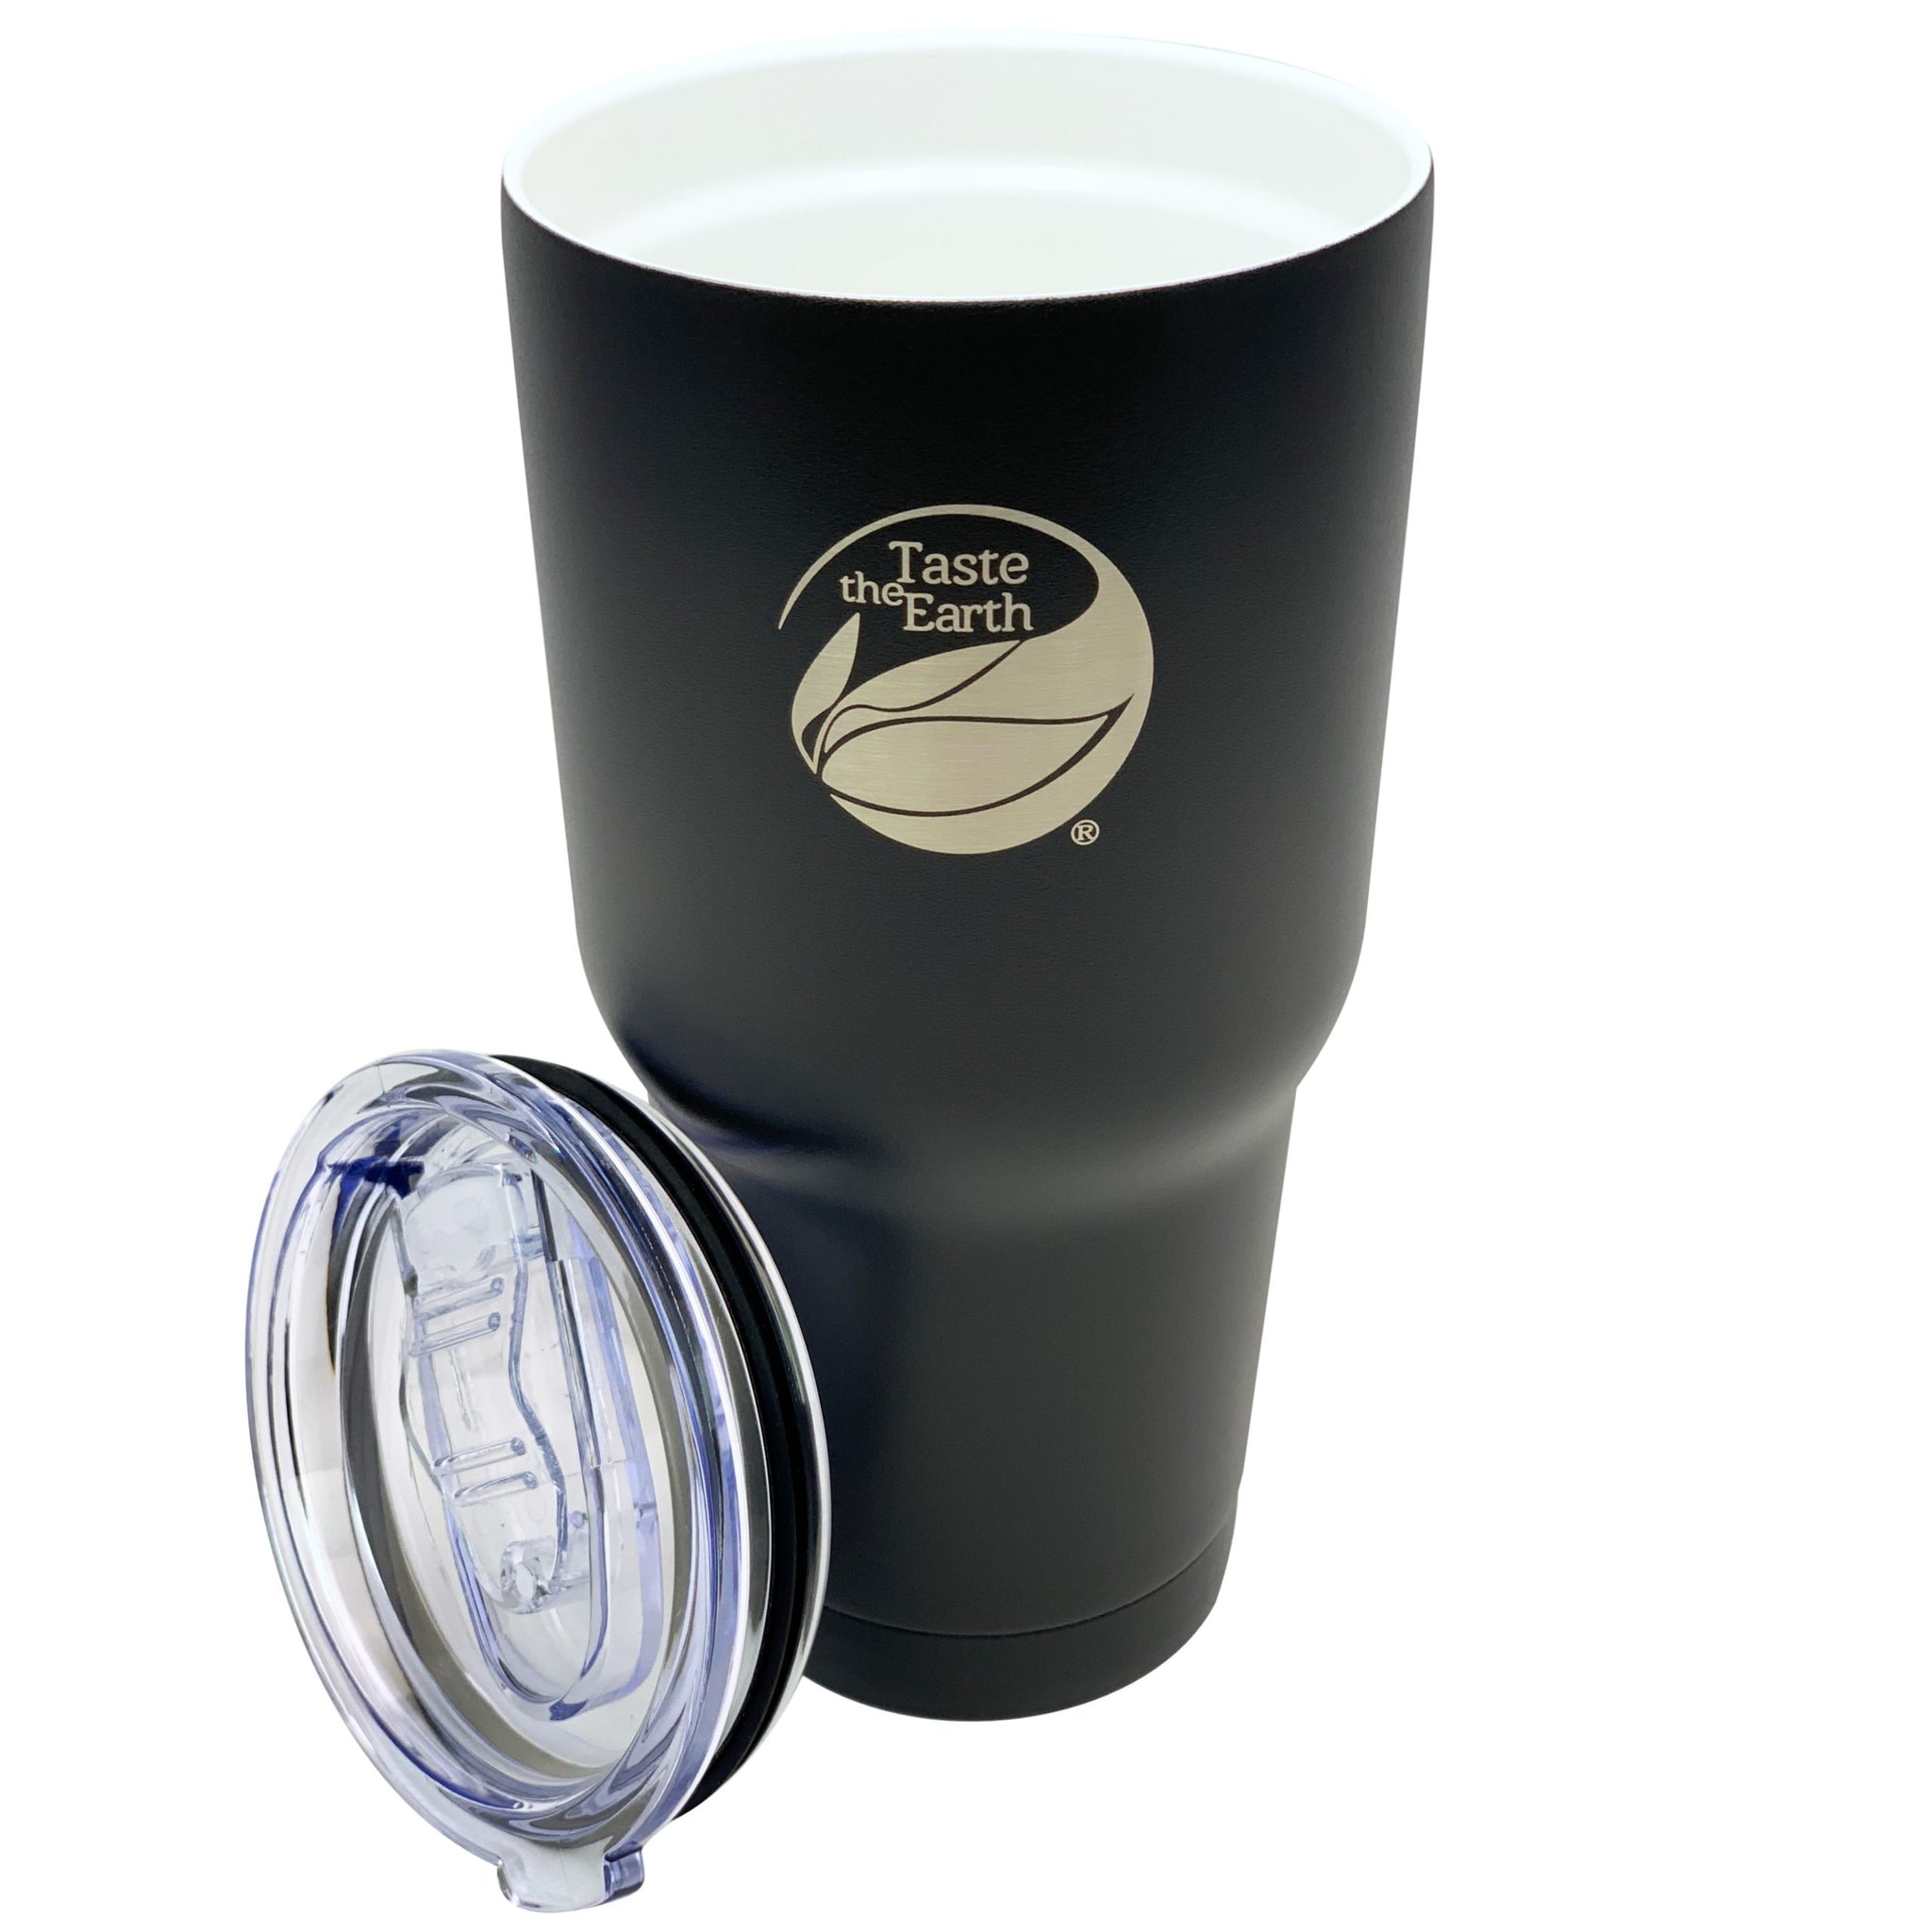 30 OZ Travel Mug Coffee Cup Satainless Steel Coffee Mug With Handle